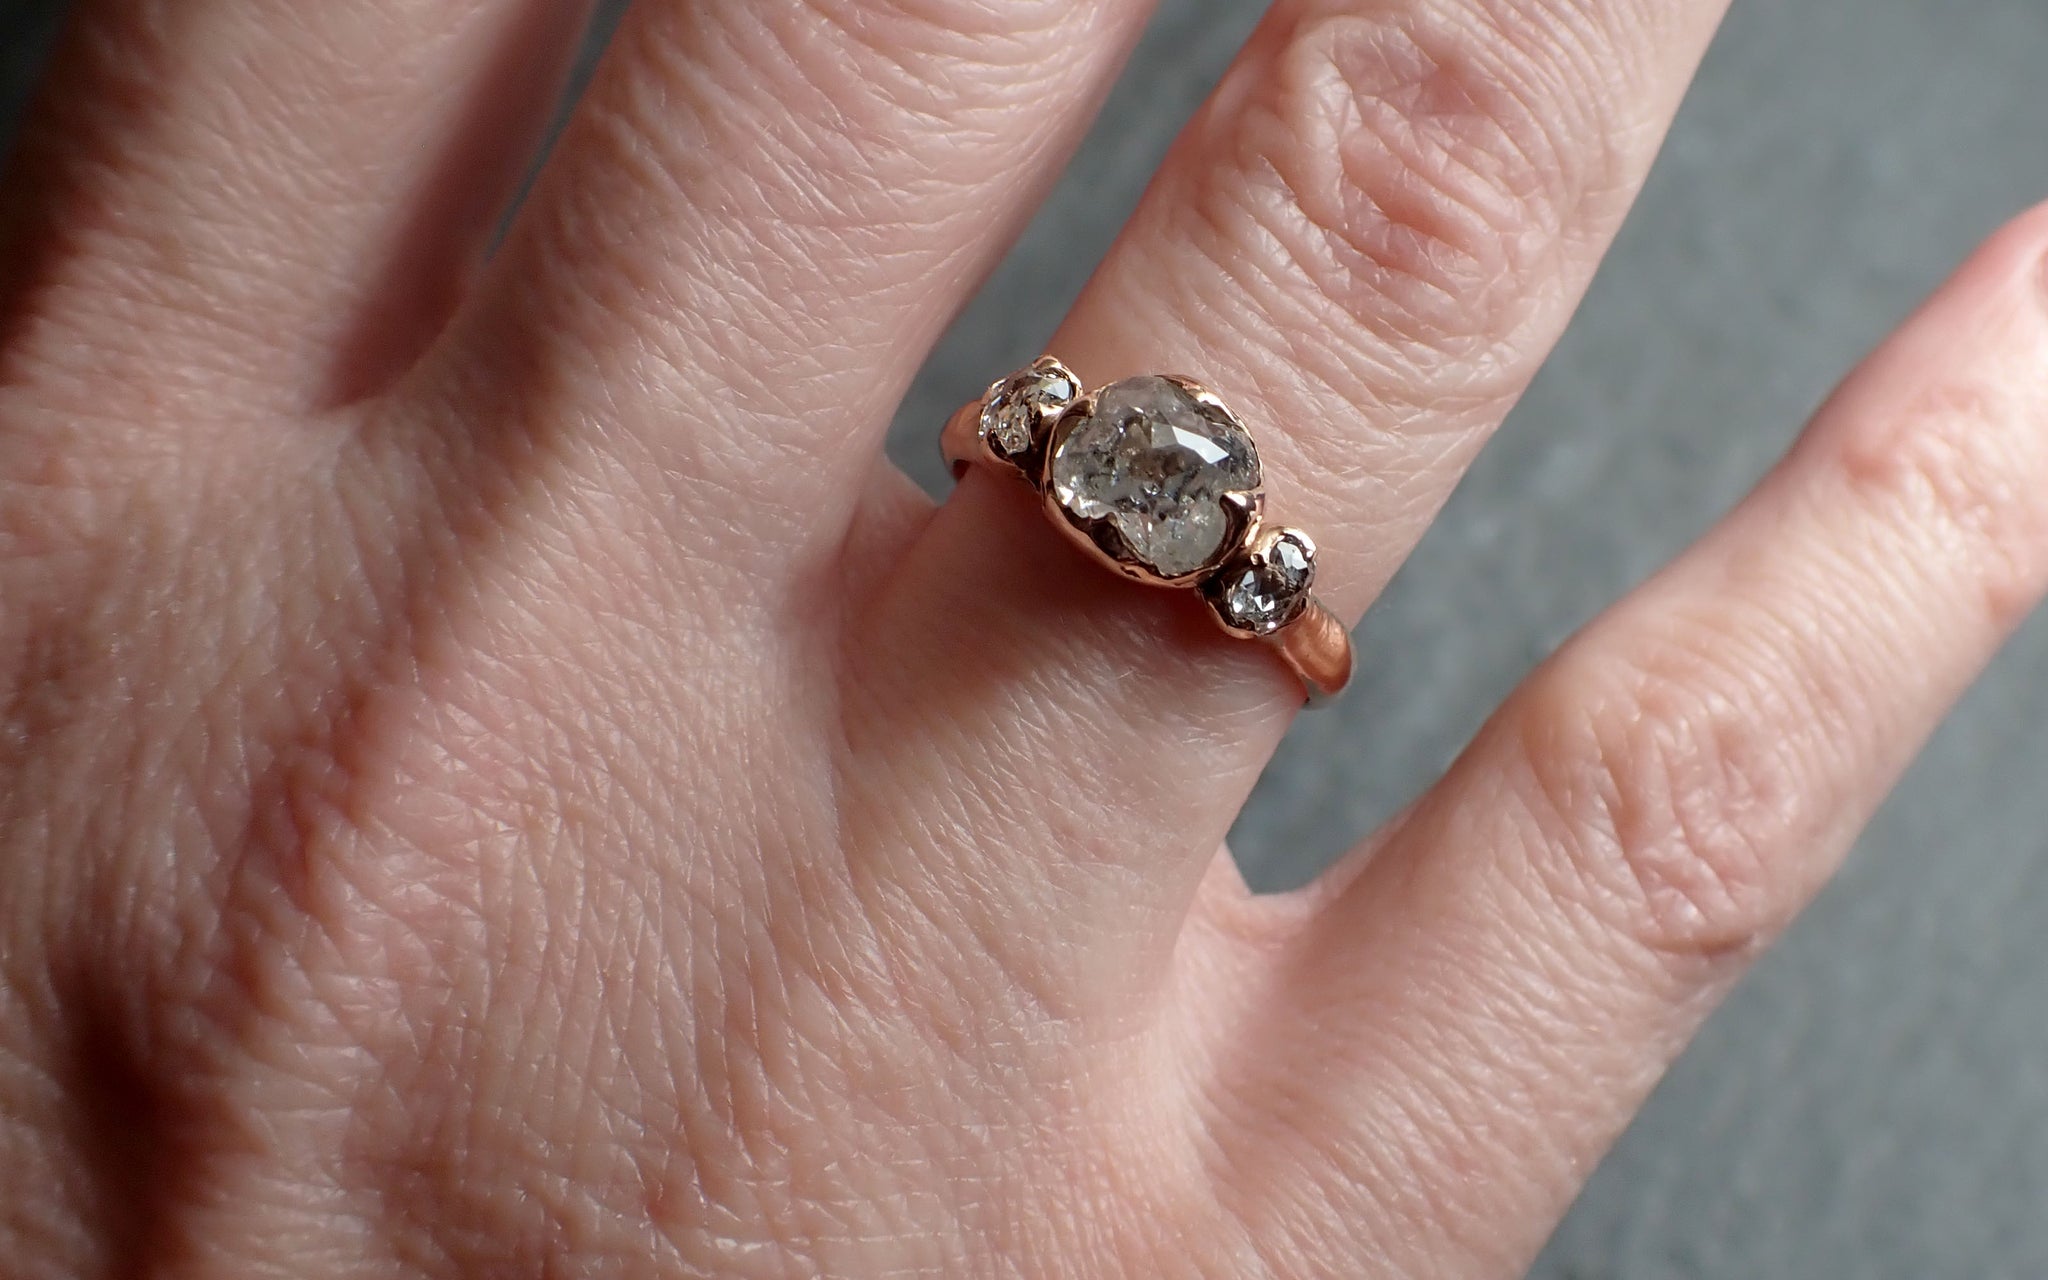 fancy cut diamond engagement 14k rose gold multi stone wedding ring byangeline 2456 Alternative Engagement